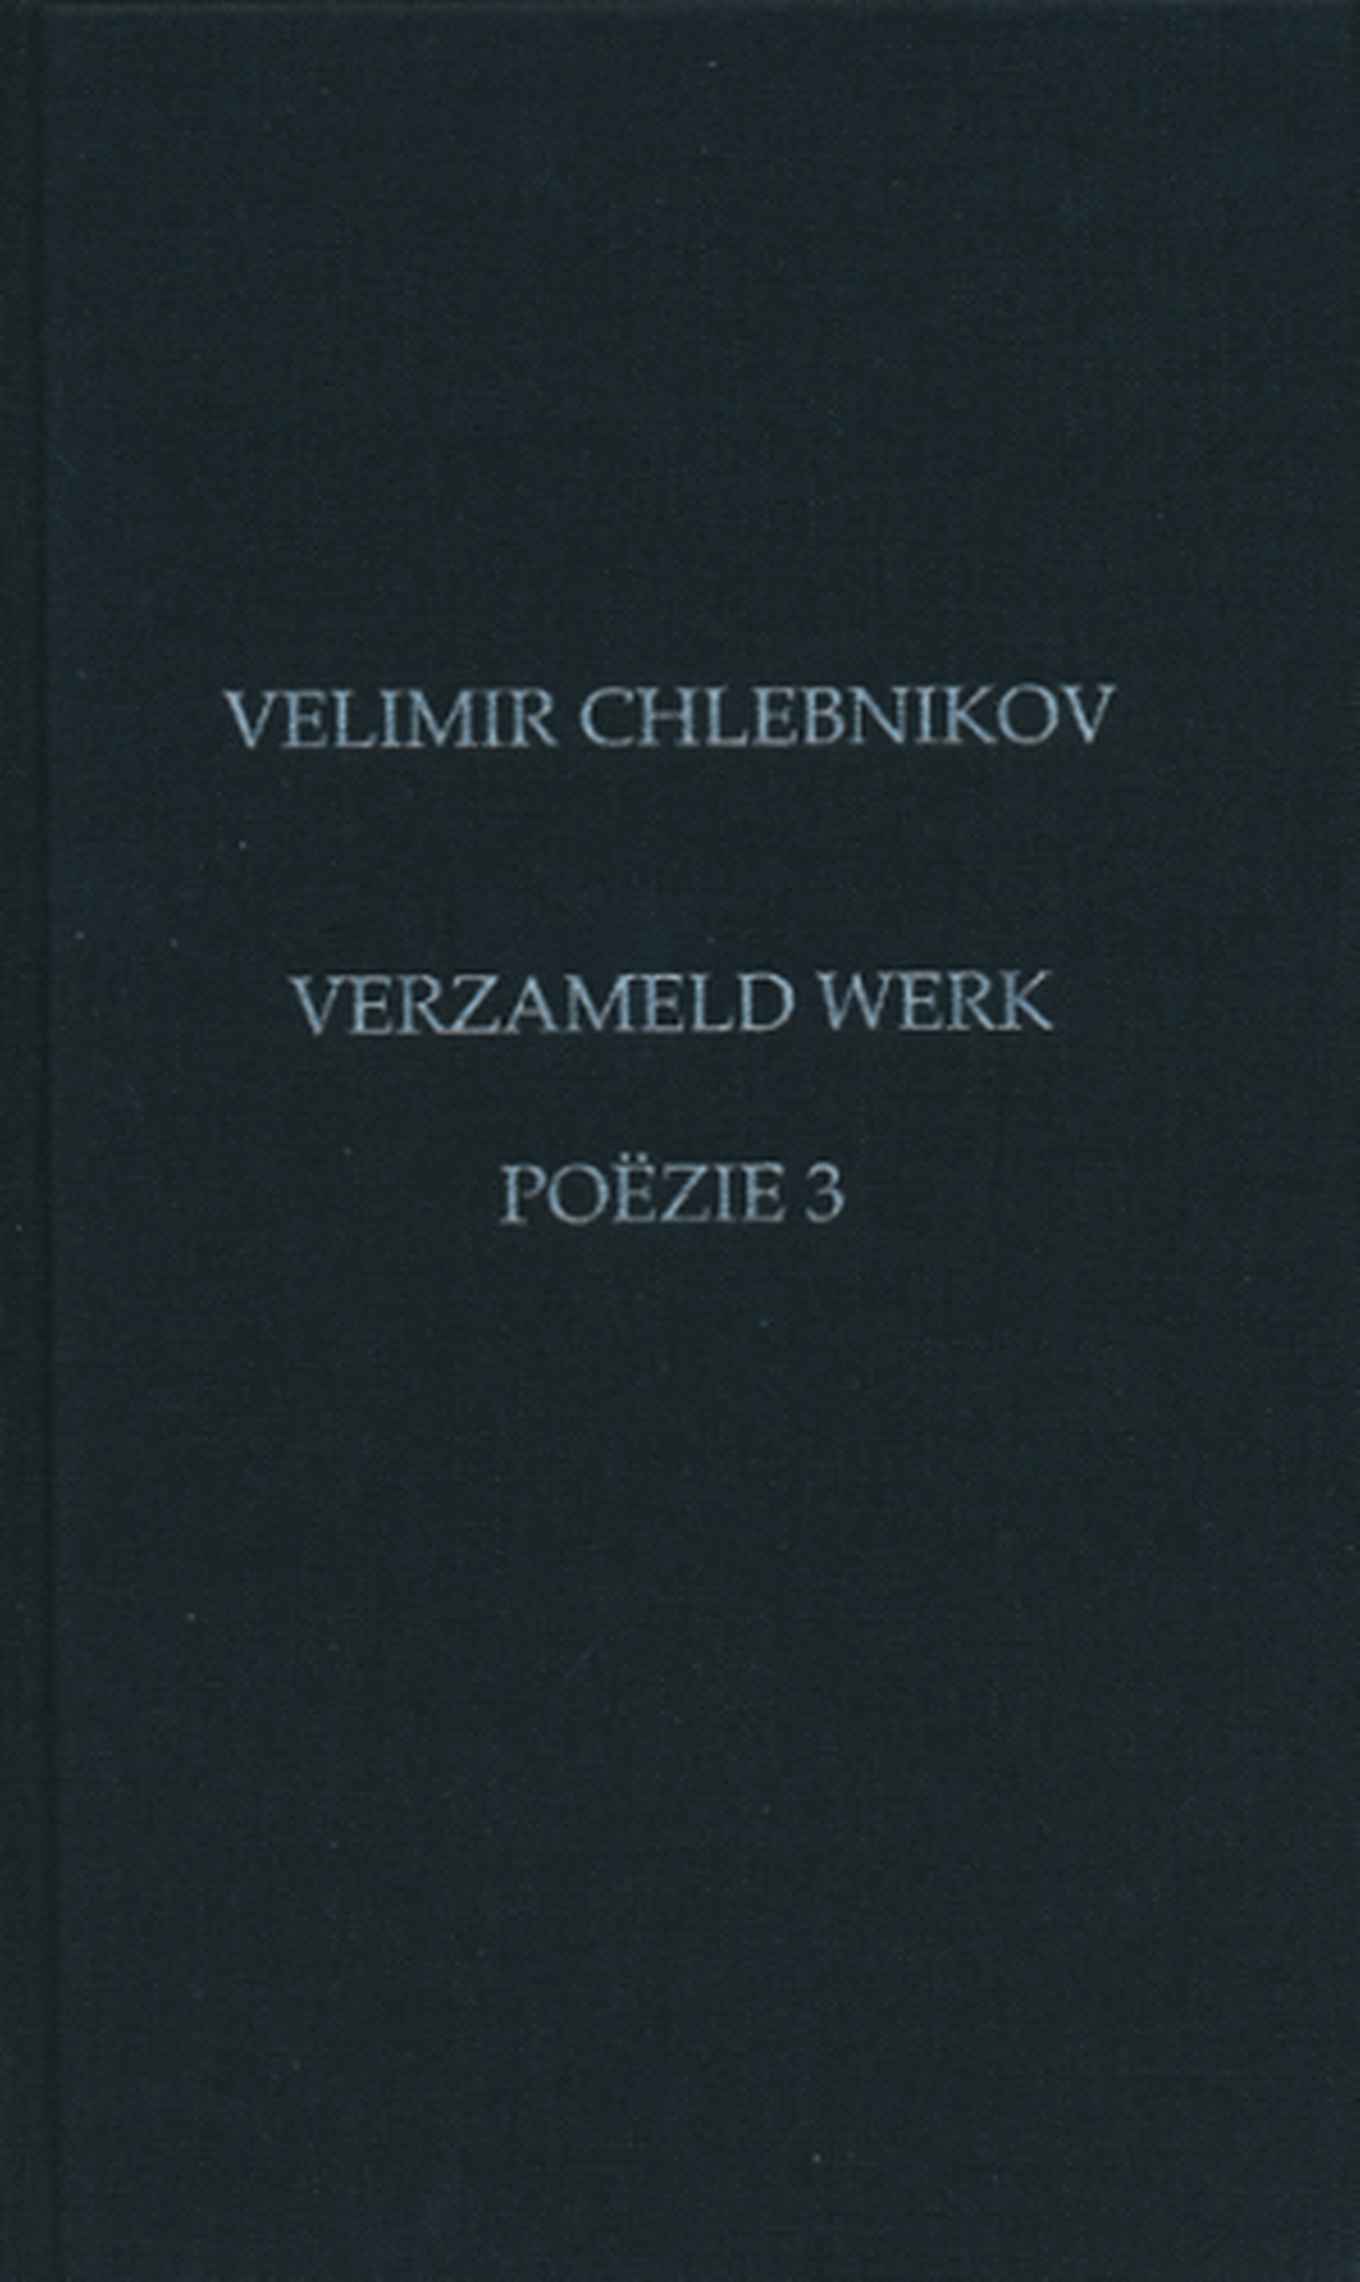 Boekomslag Velimir Chlebnikov, Verzameld werk. Poëzie 3